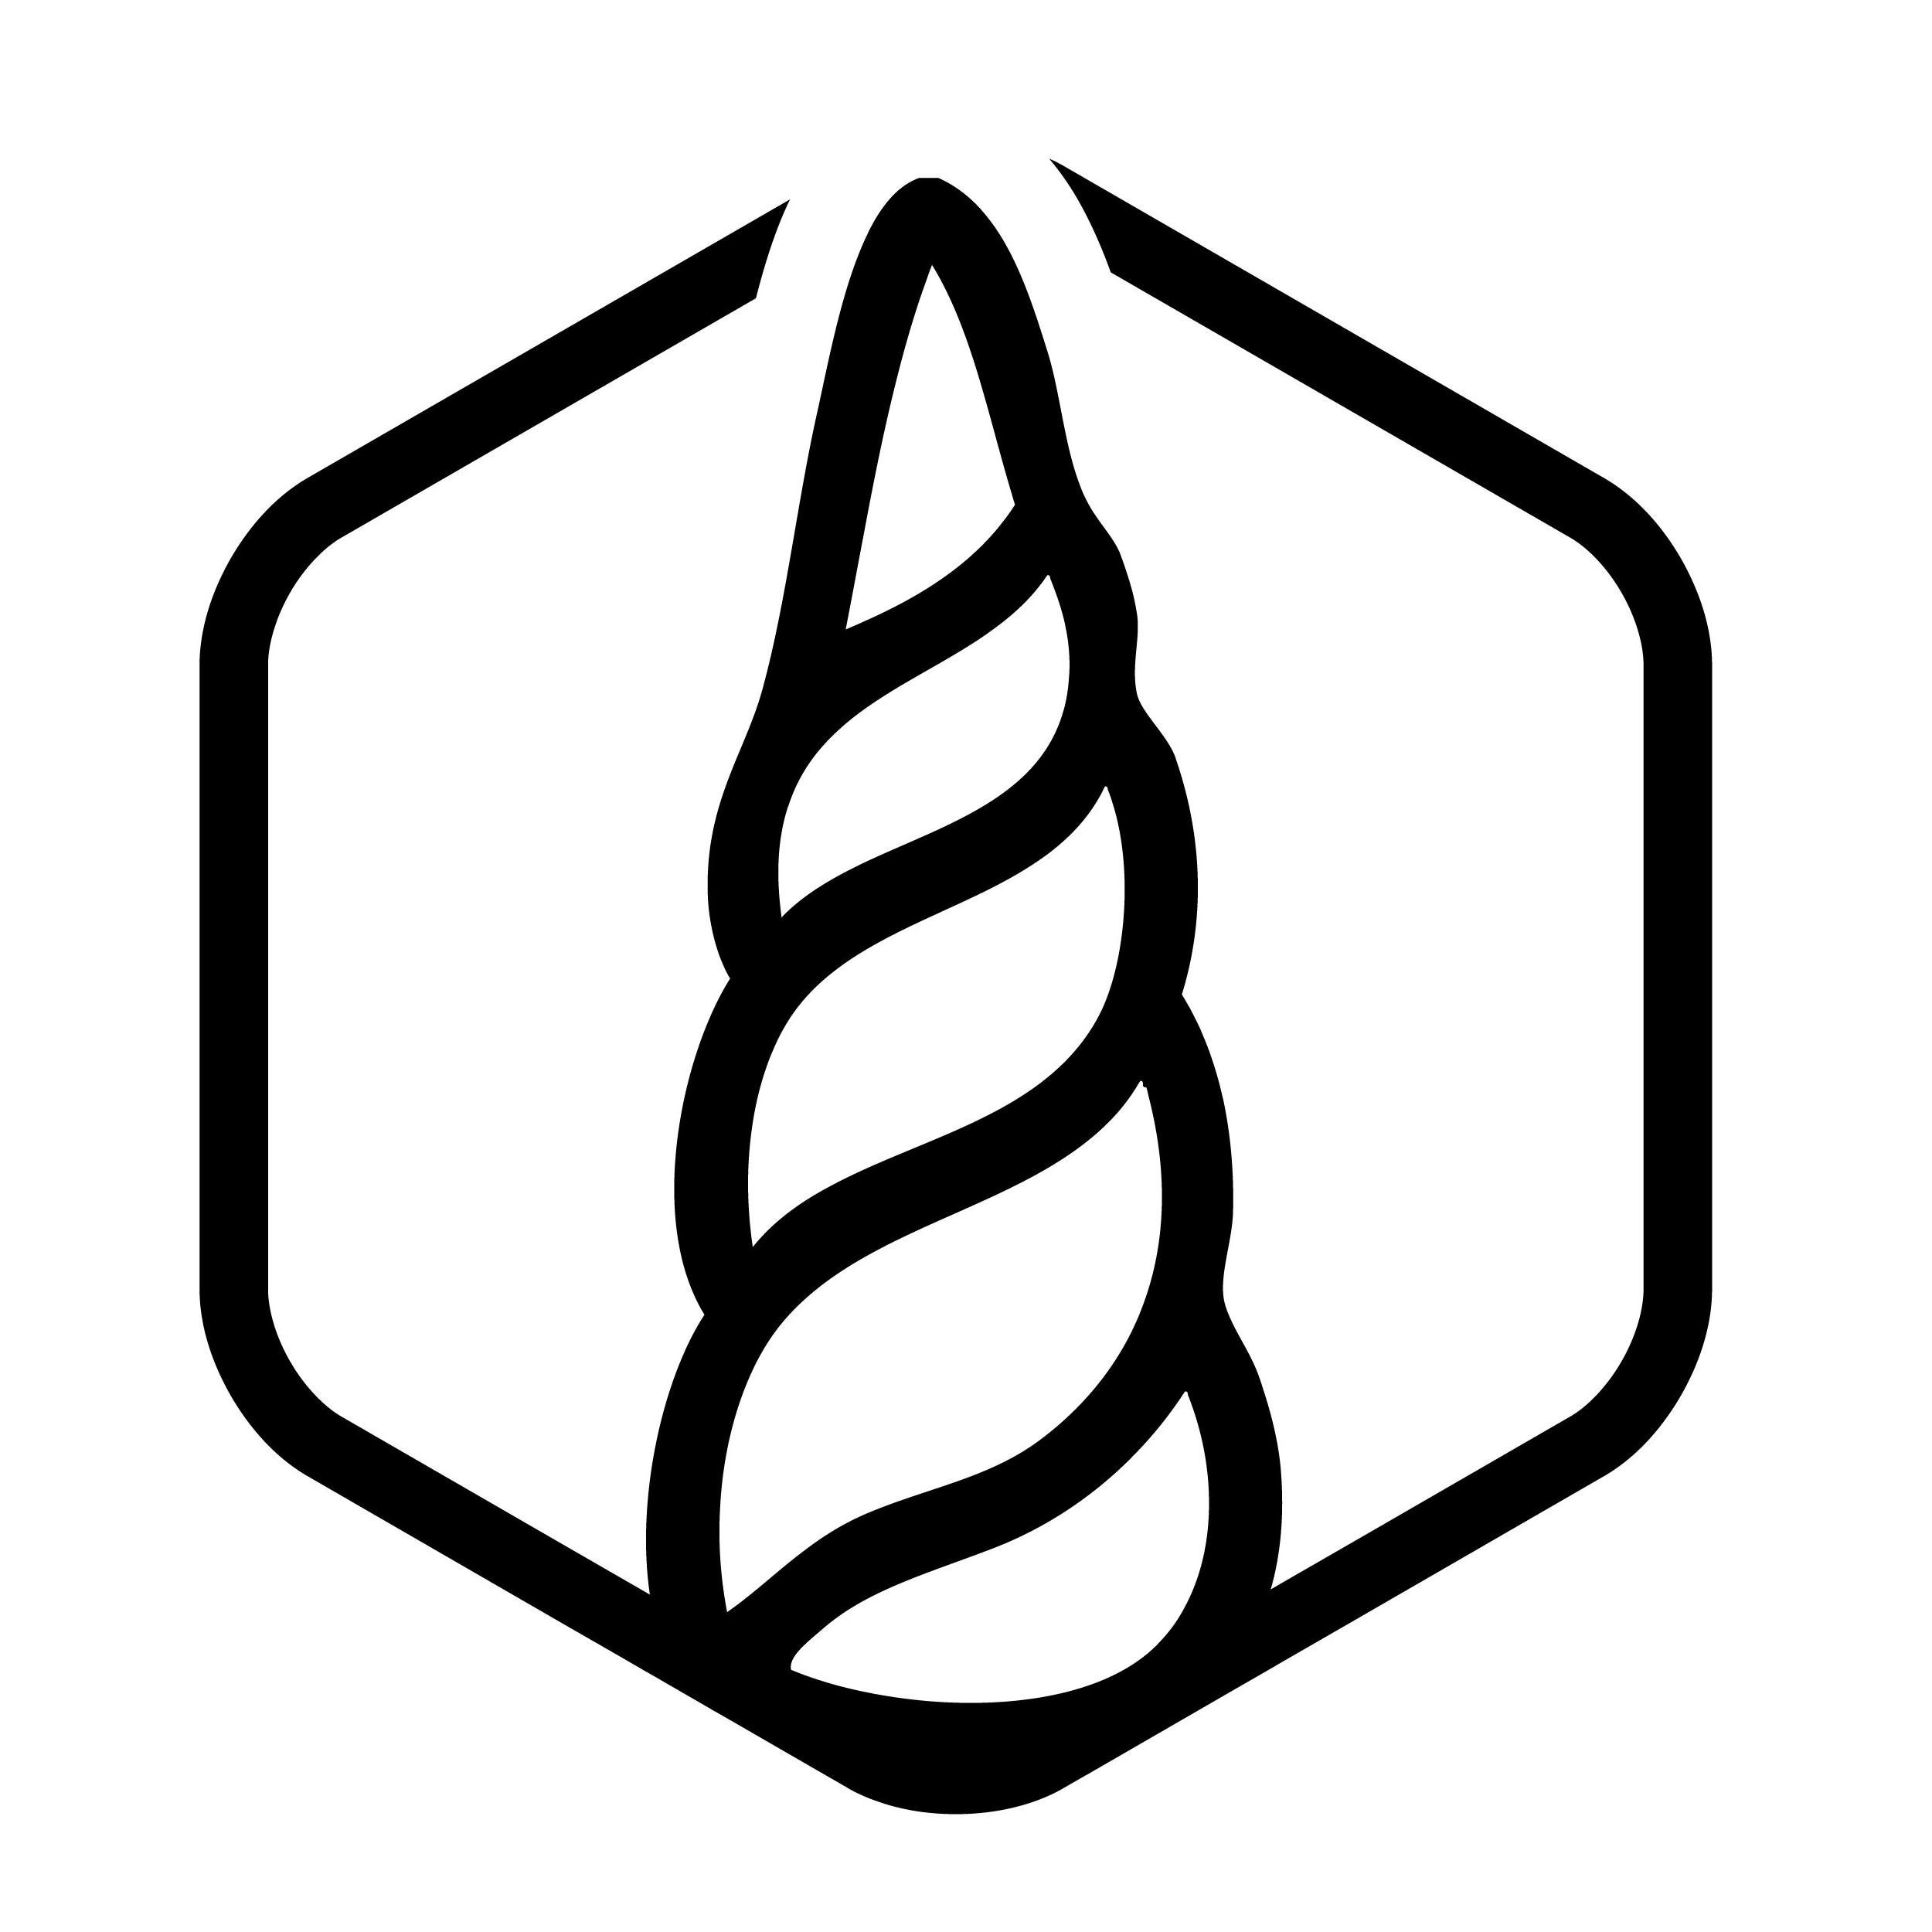 Uniqode logo